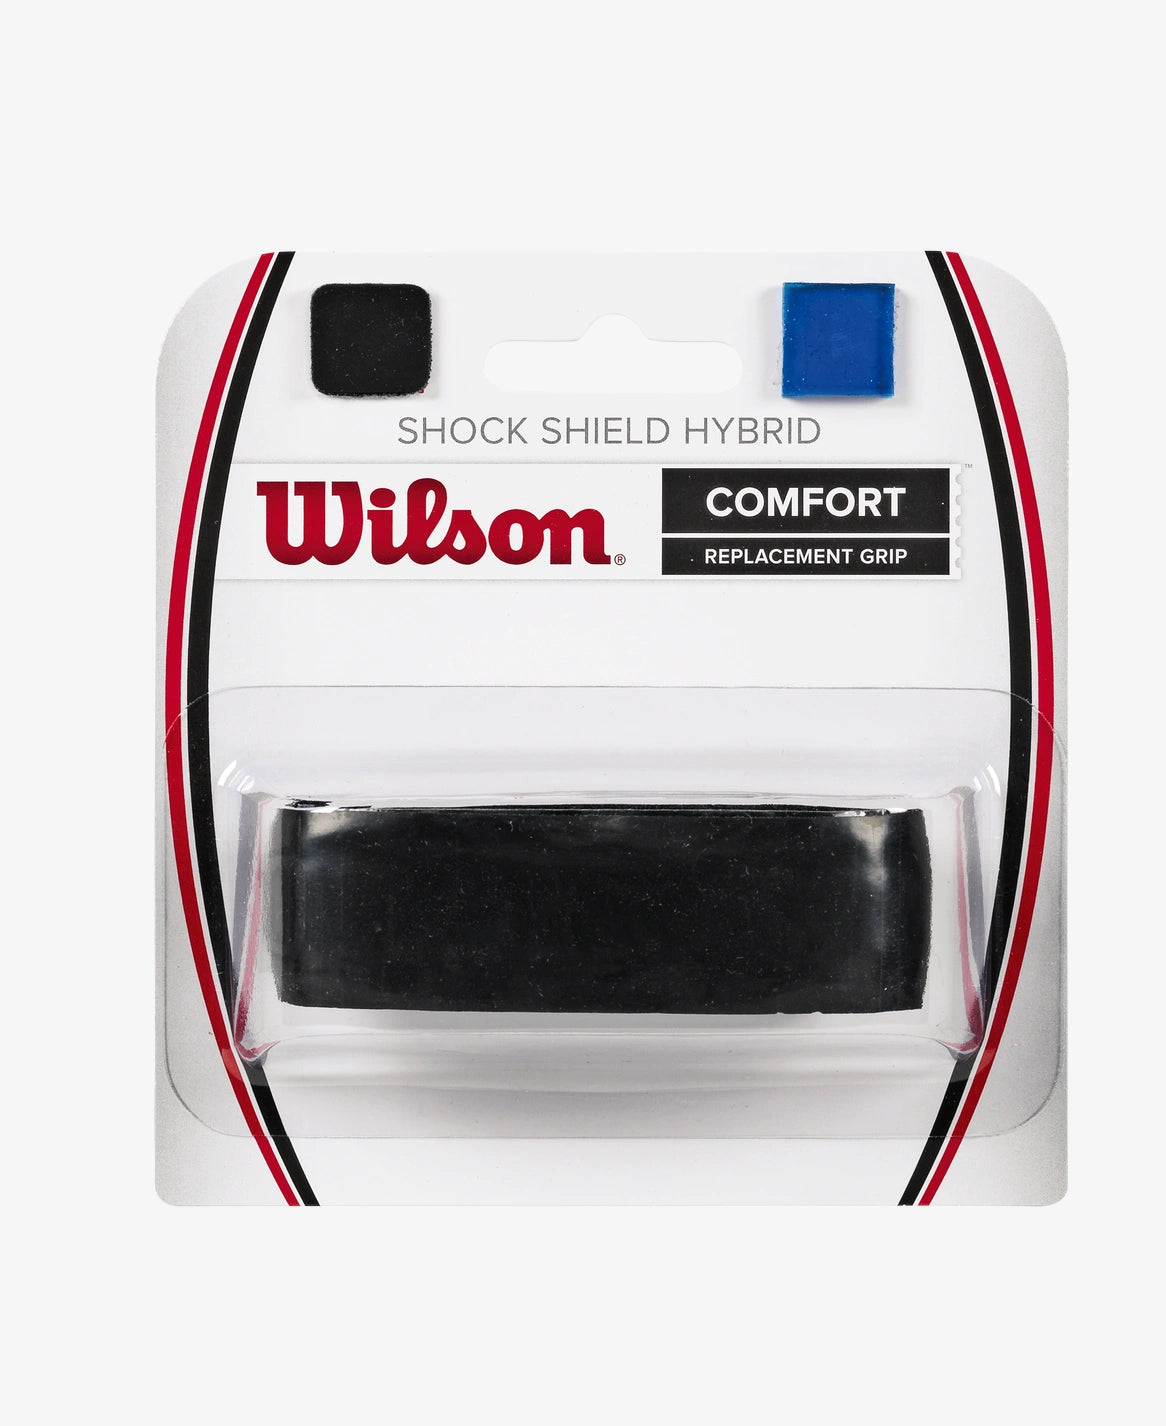 Wilson Shock Shield Hybrid (Black)